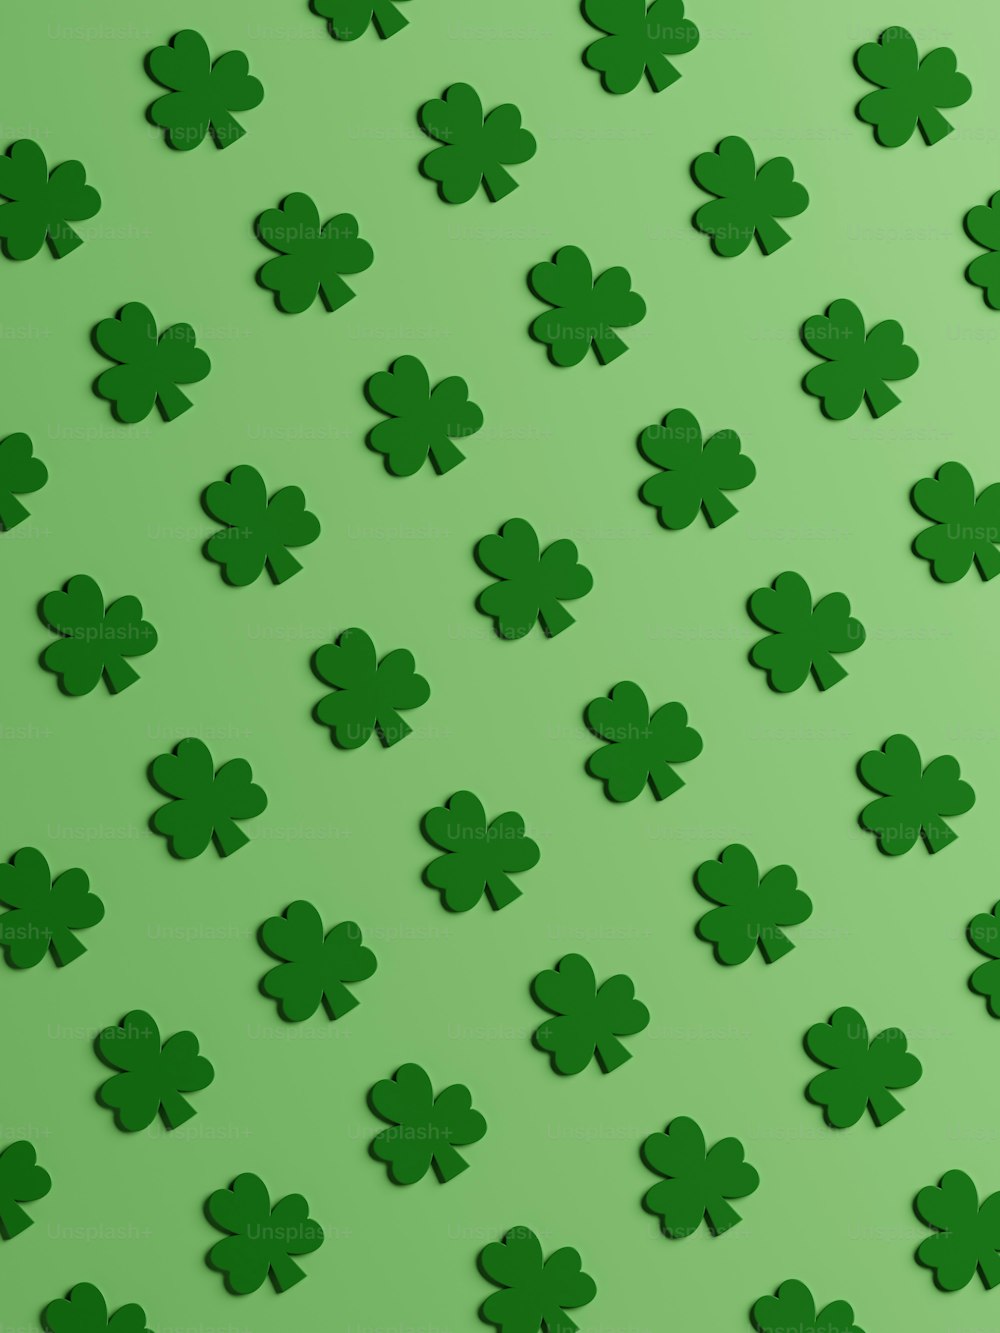 a pattern of green shamrocks on a green background